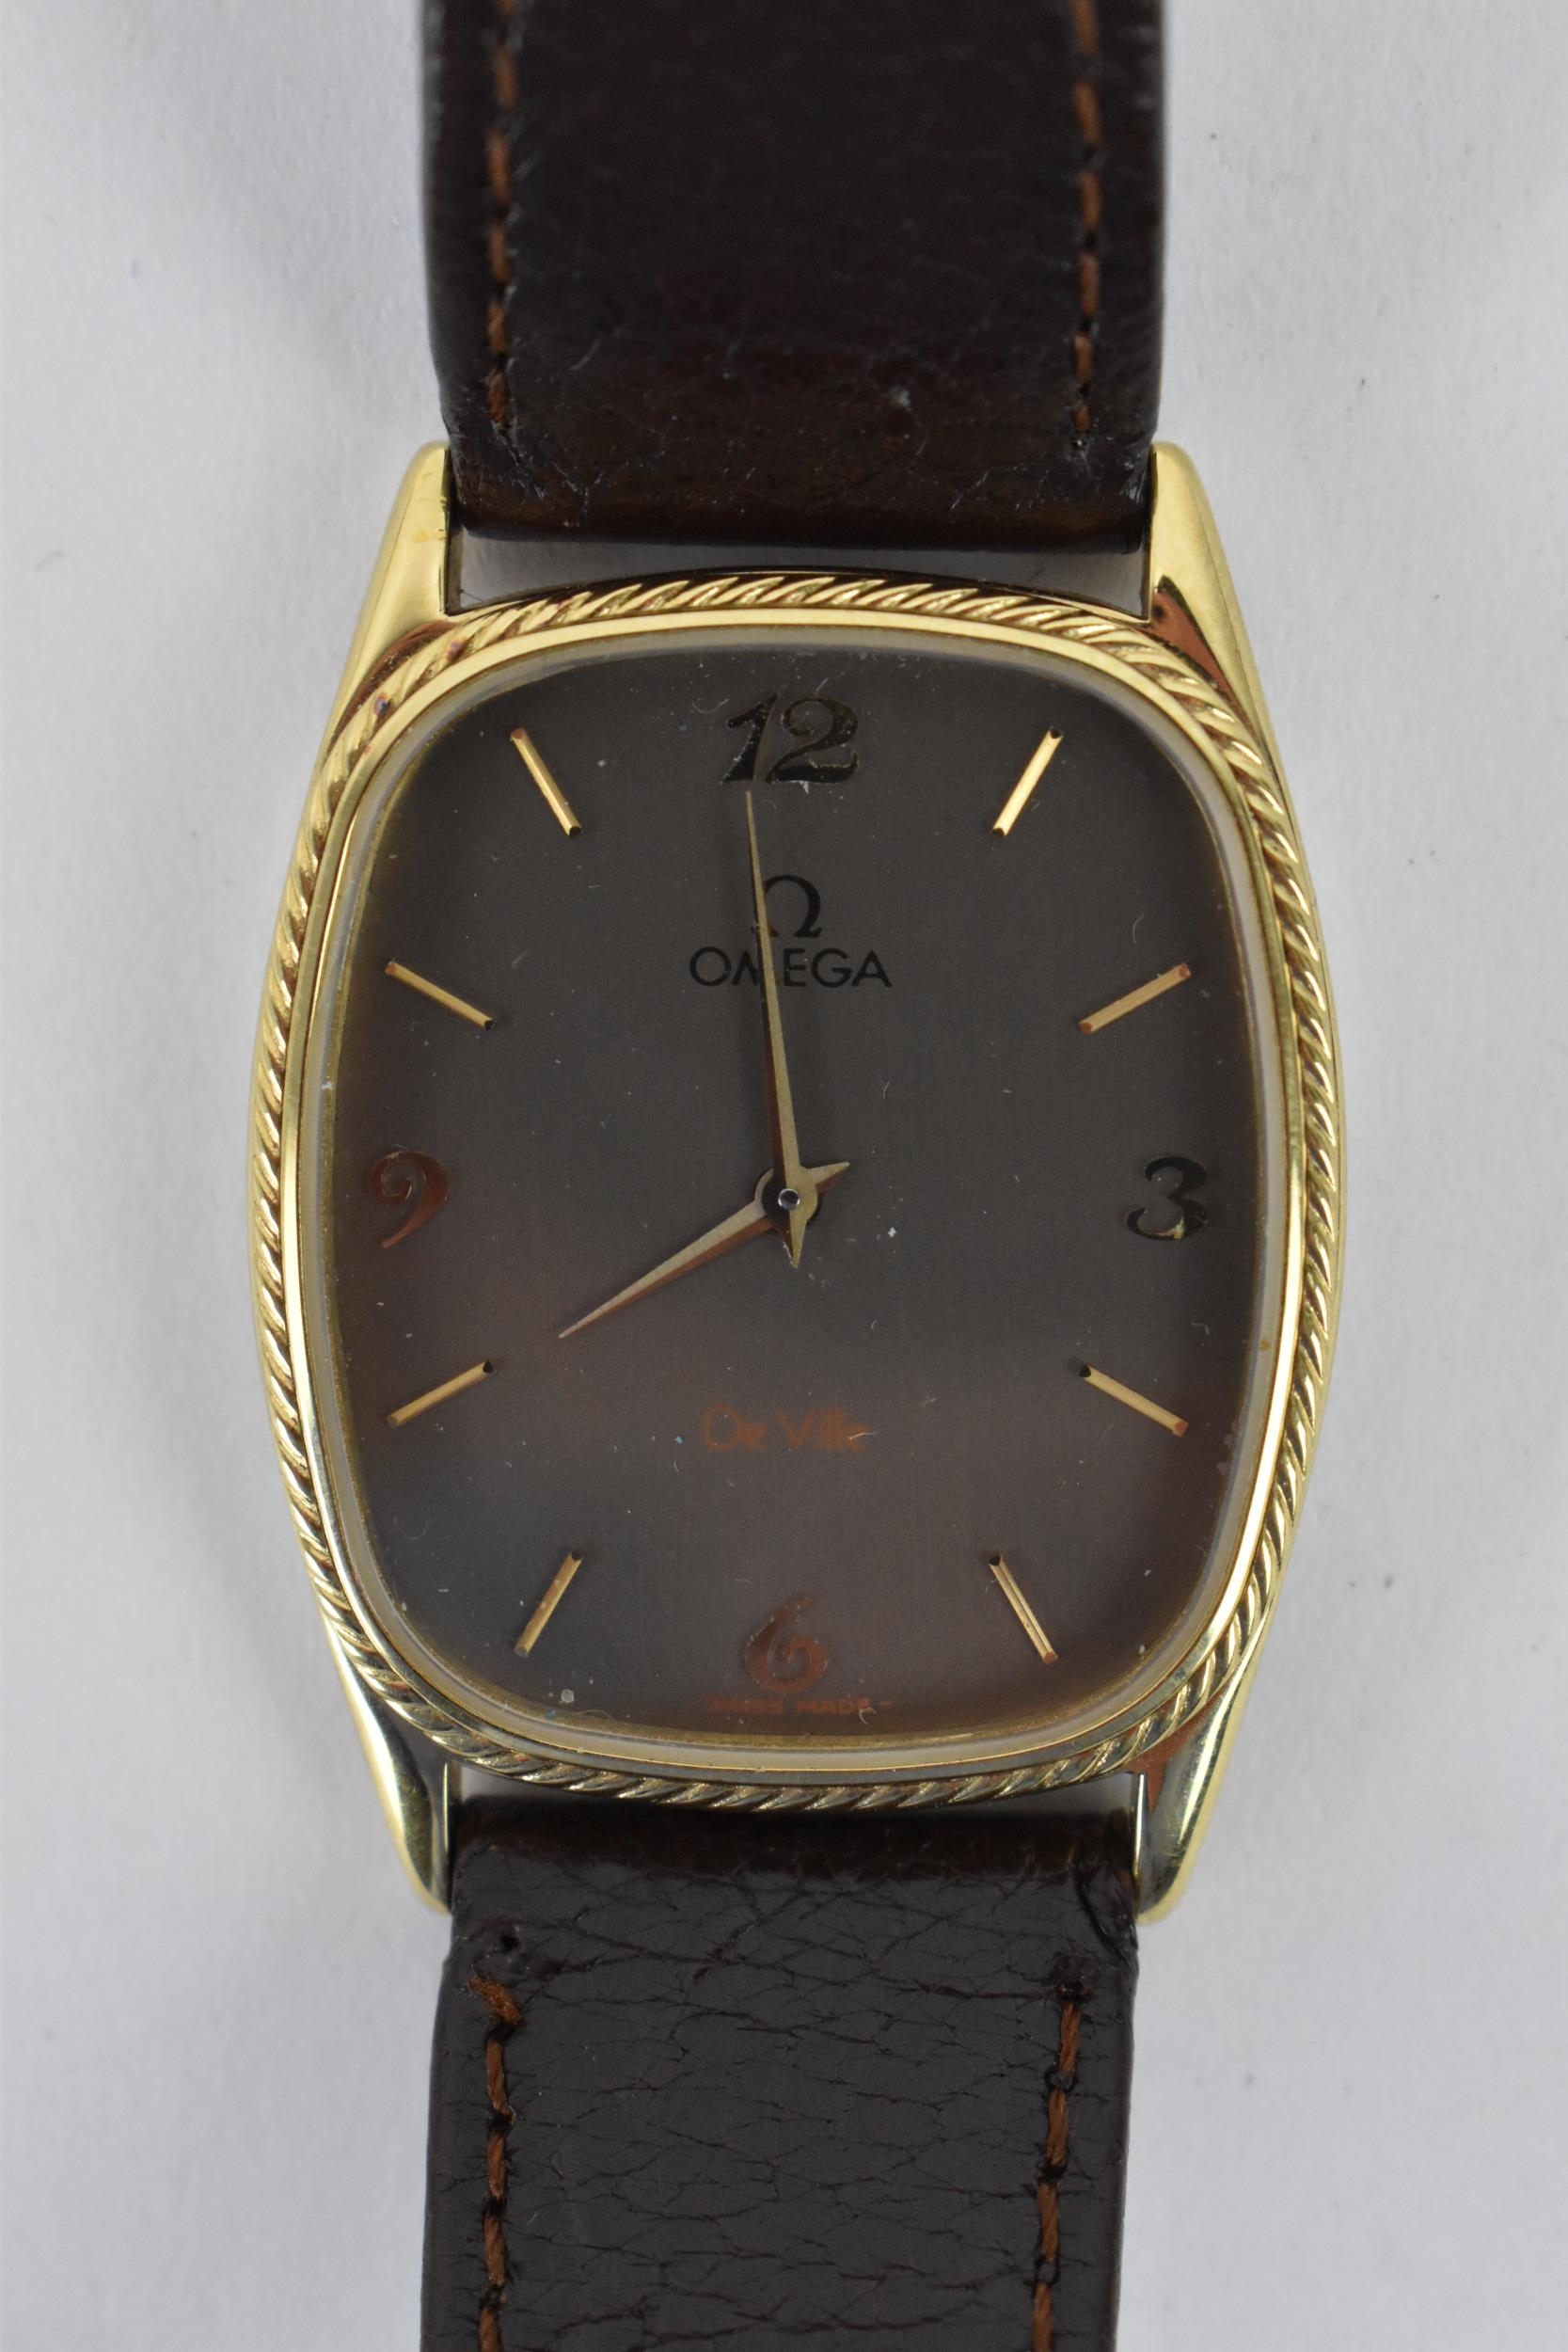 An Omega De Ville , quartz, gents, gold plated wristwatch, the dial having Arabic numerals and baton